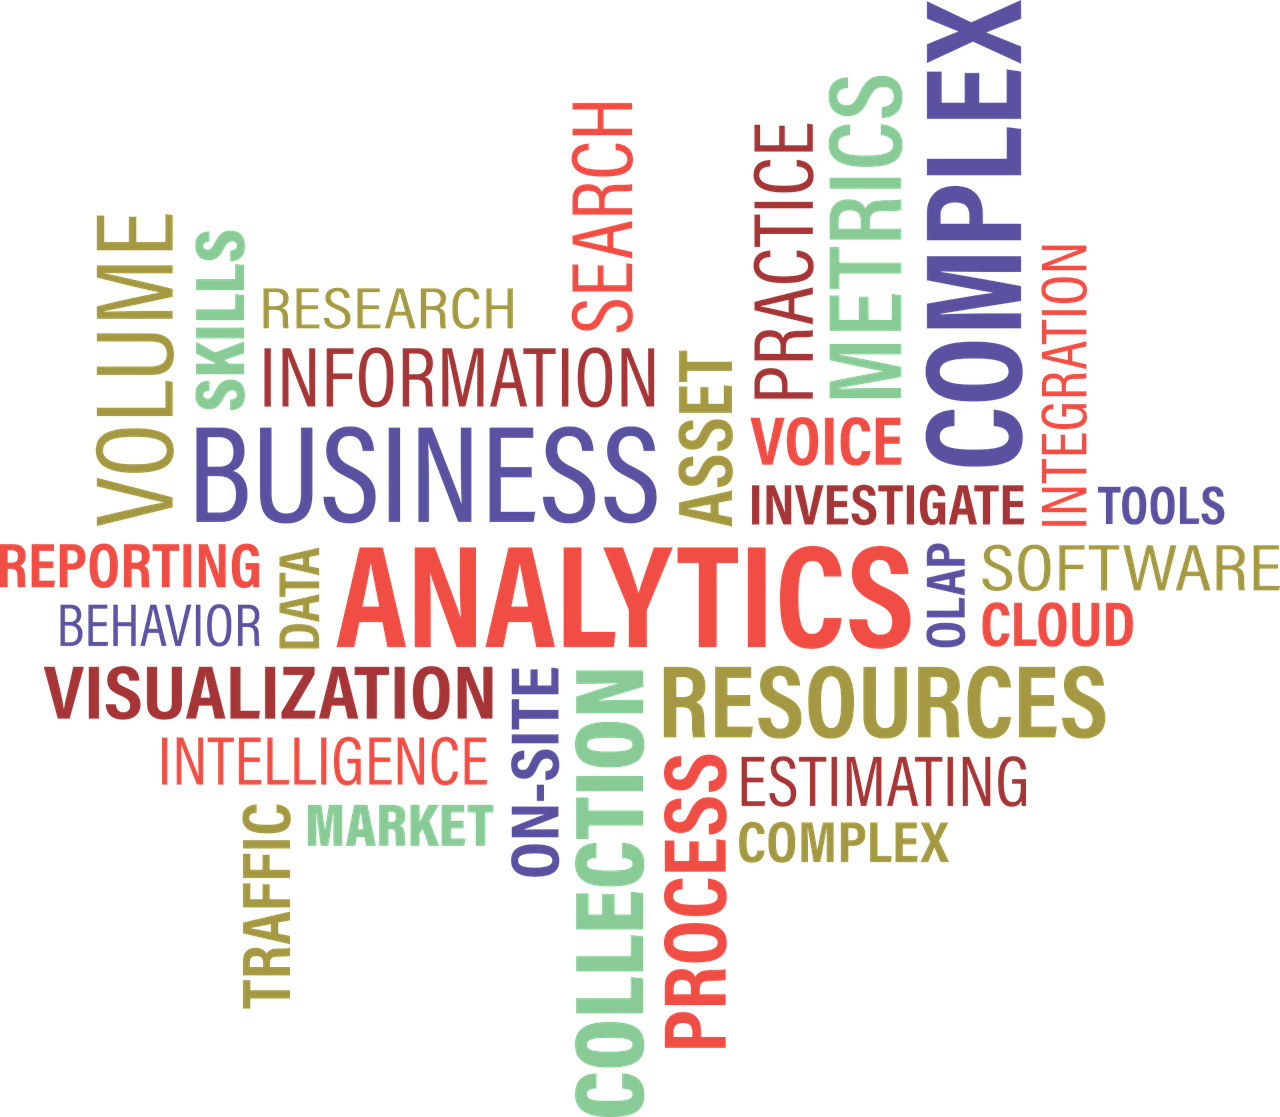 analytics, business, resources